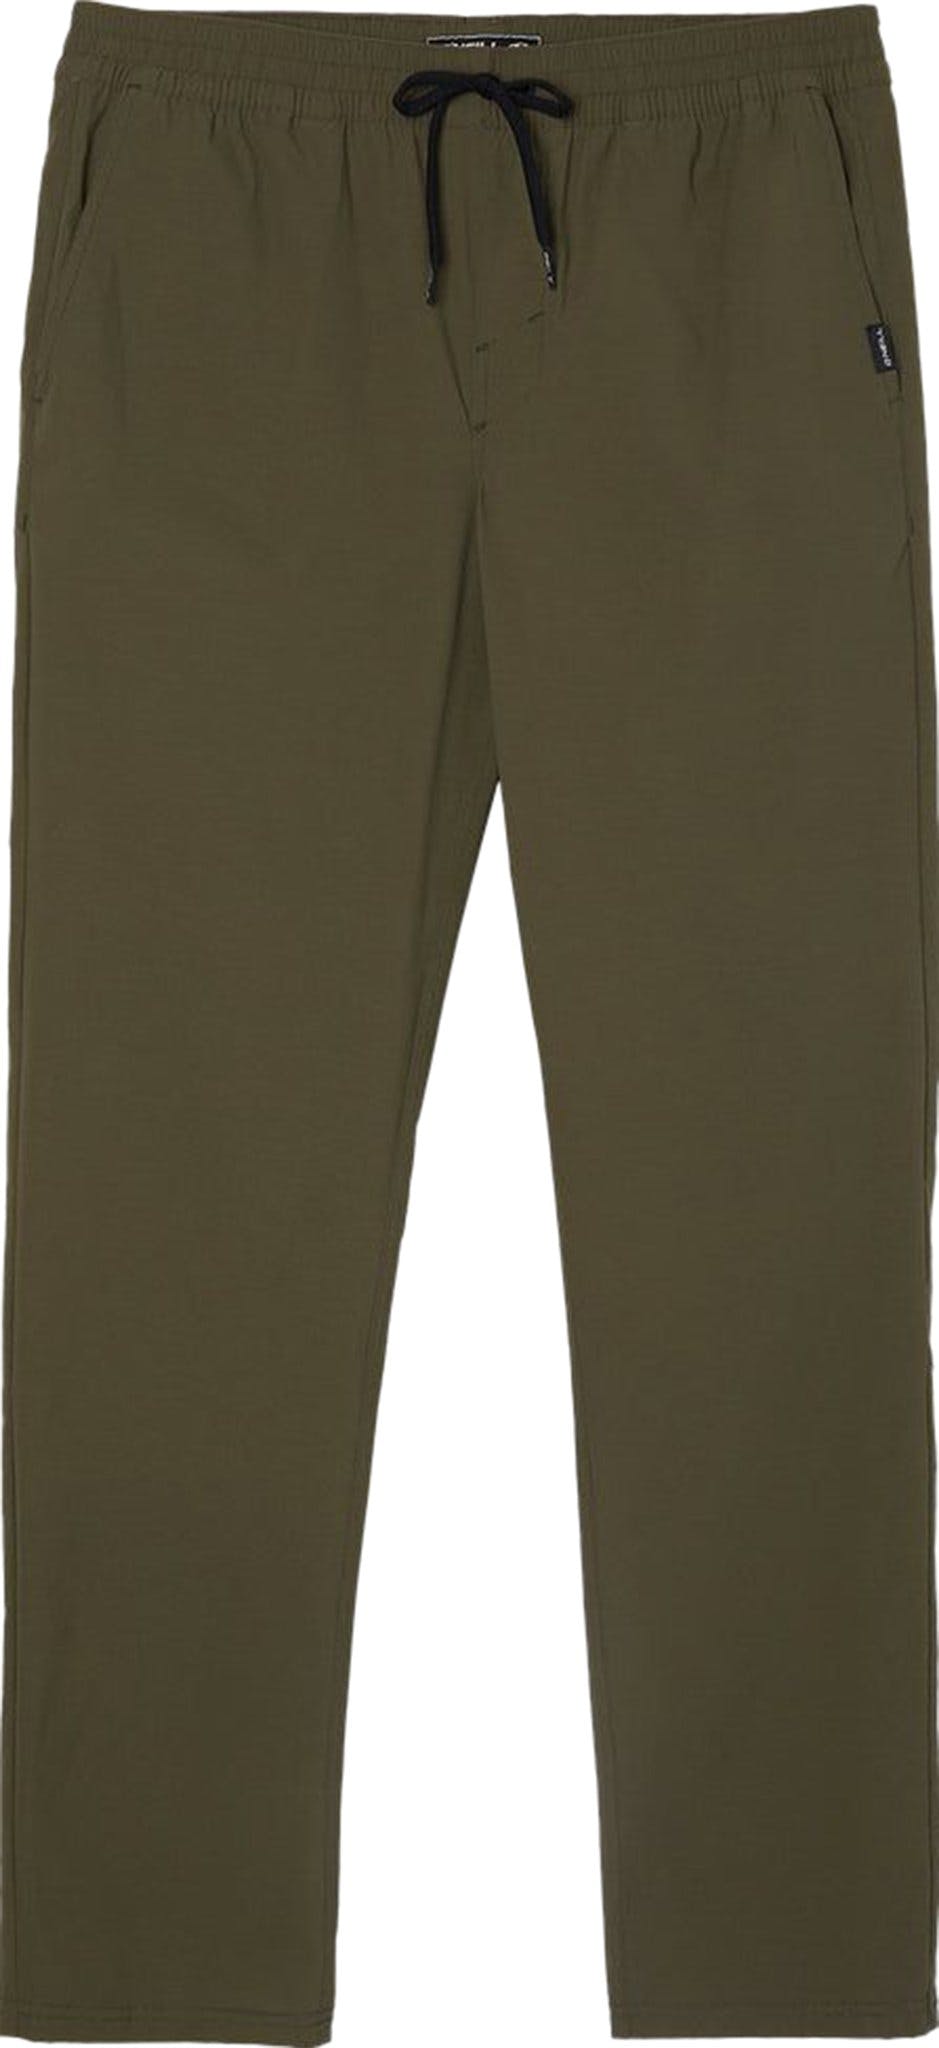 Product image for TRVLR Coast Hybrid Pant - Men's